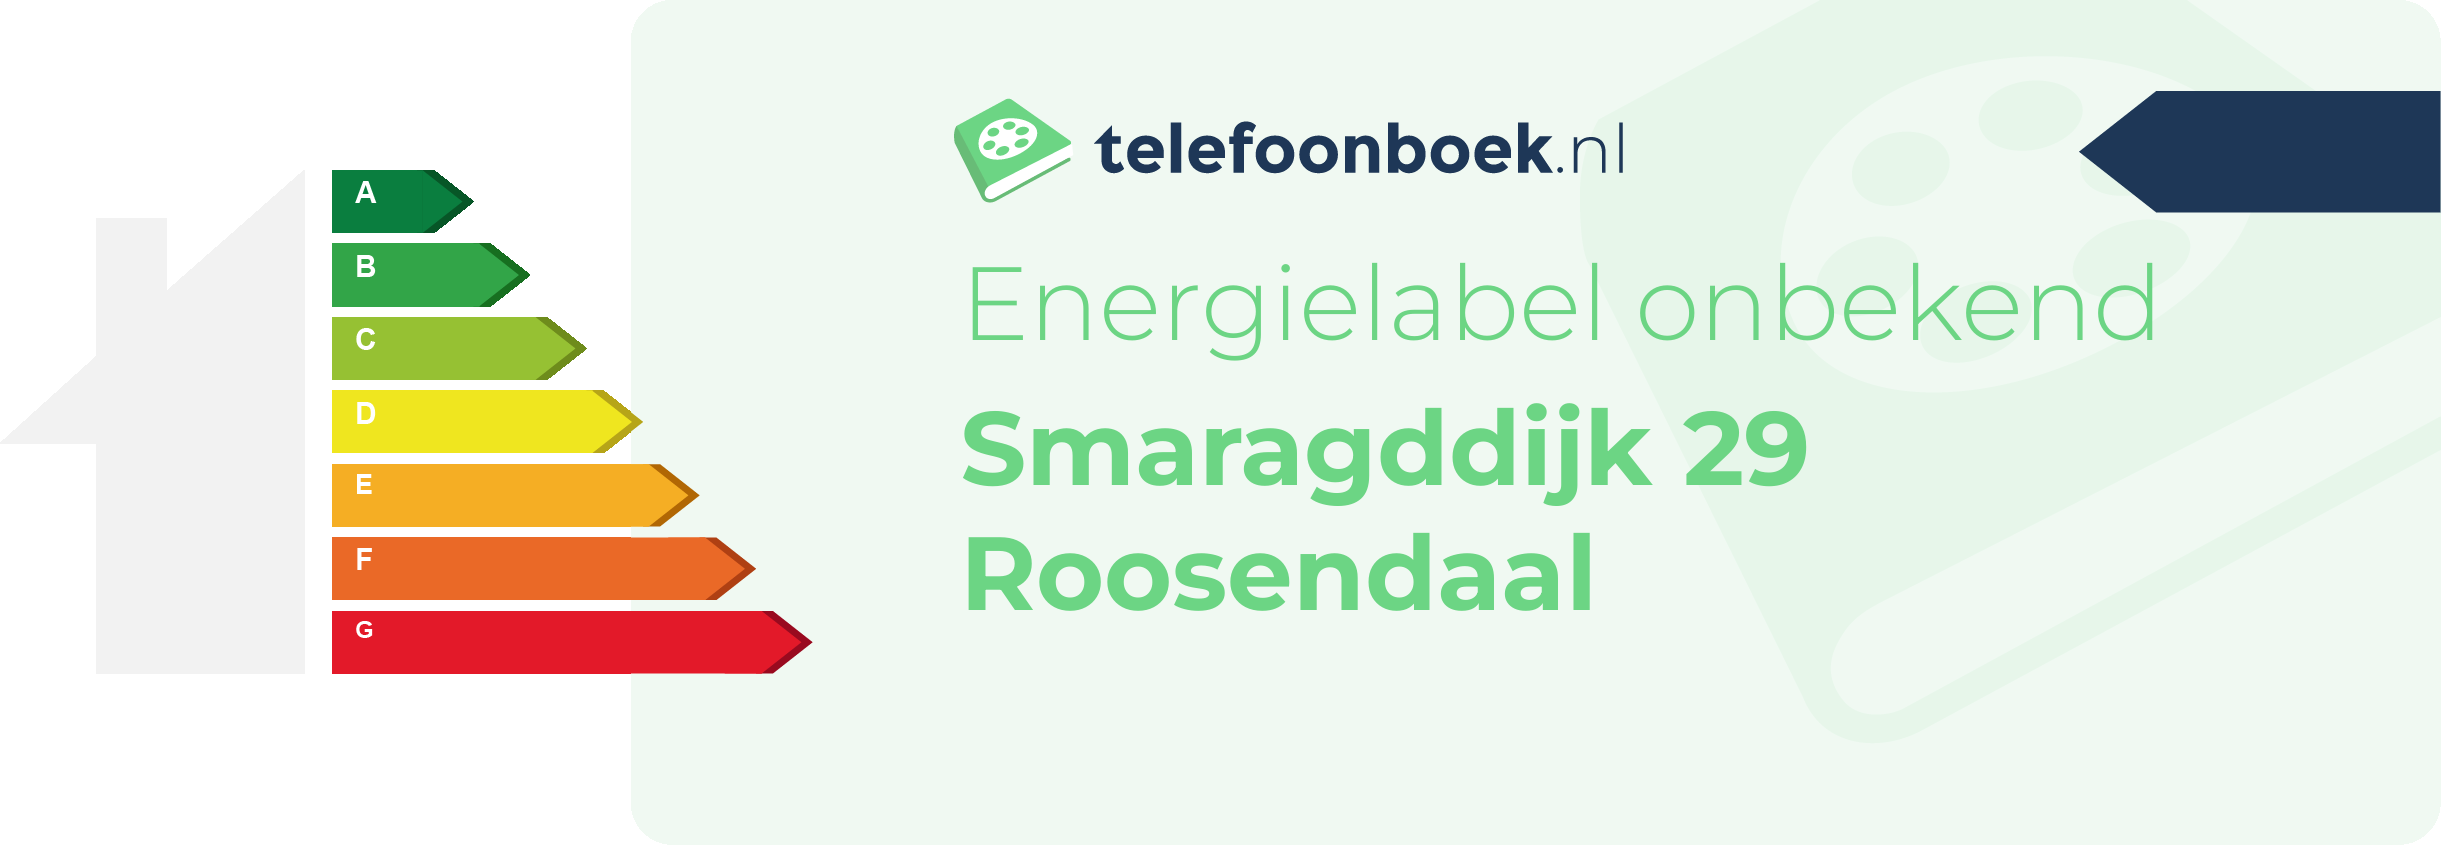 Energielabel Smaragddijk 29 Roosendaal